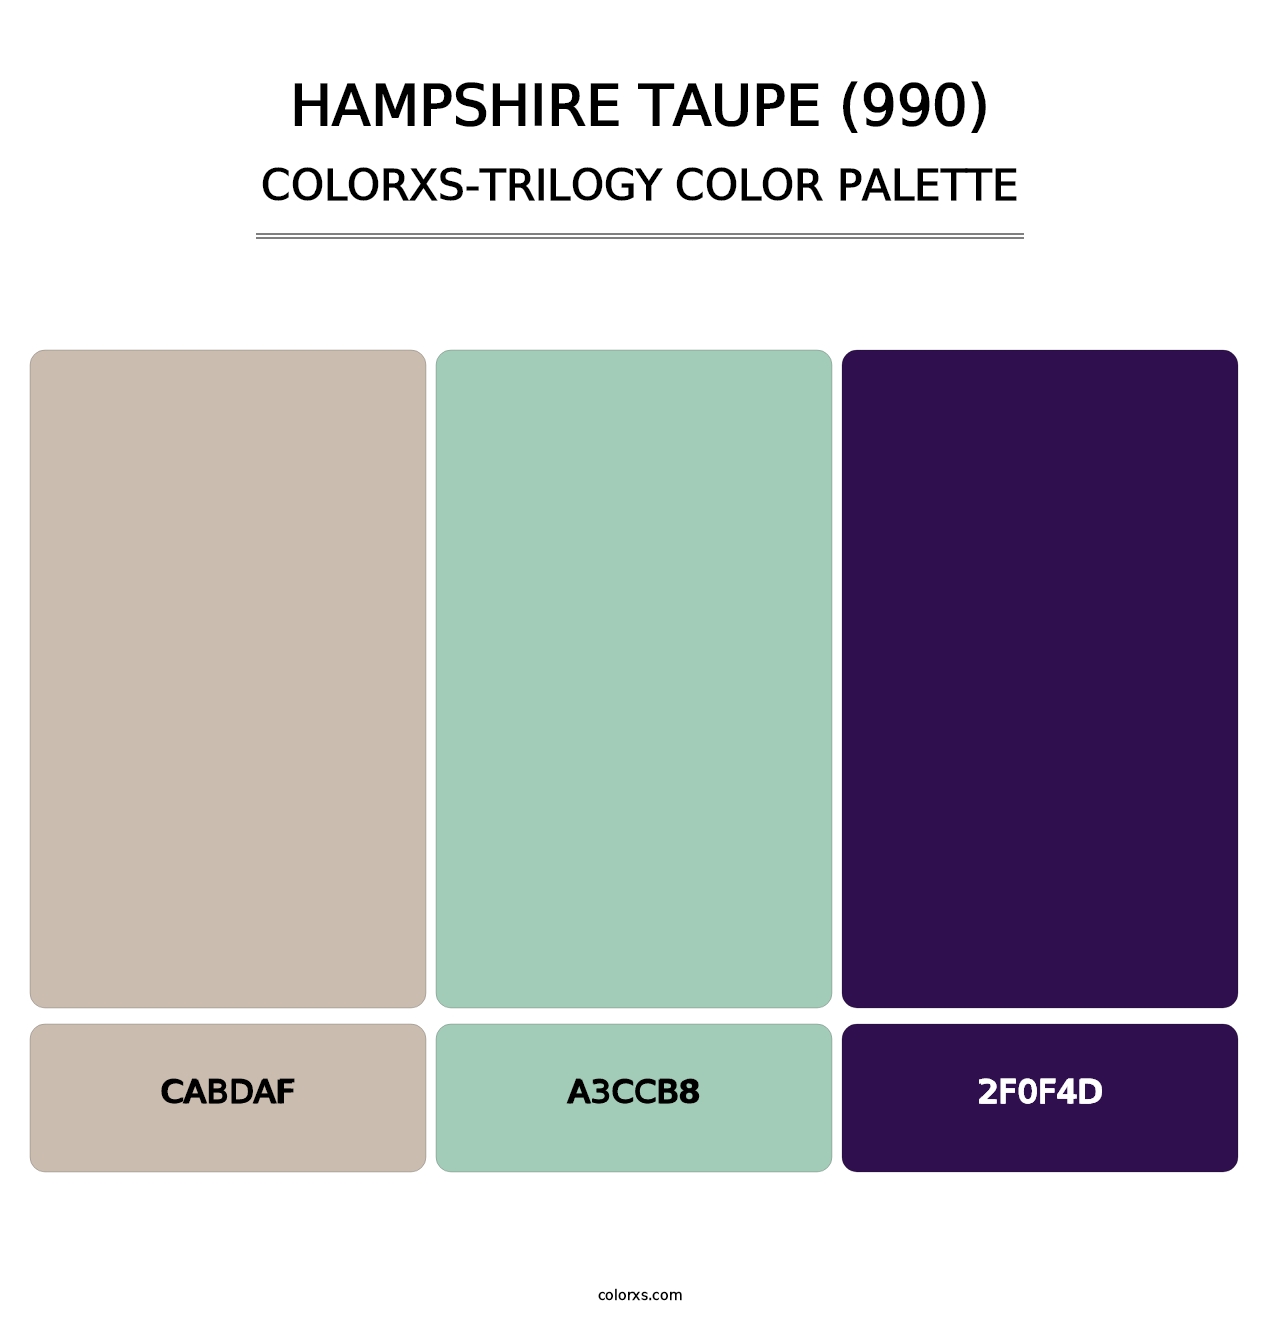 Hampshire Taupe (990) - Colorxs Trilogy Palette